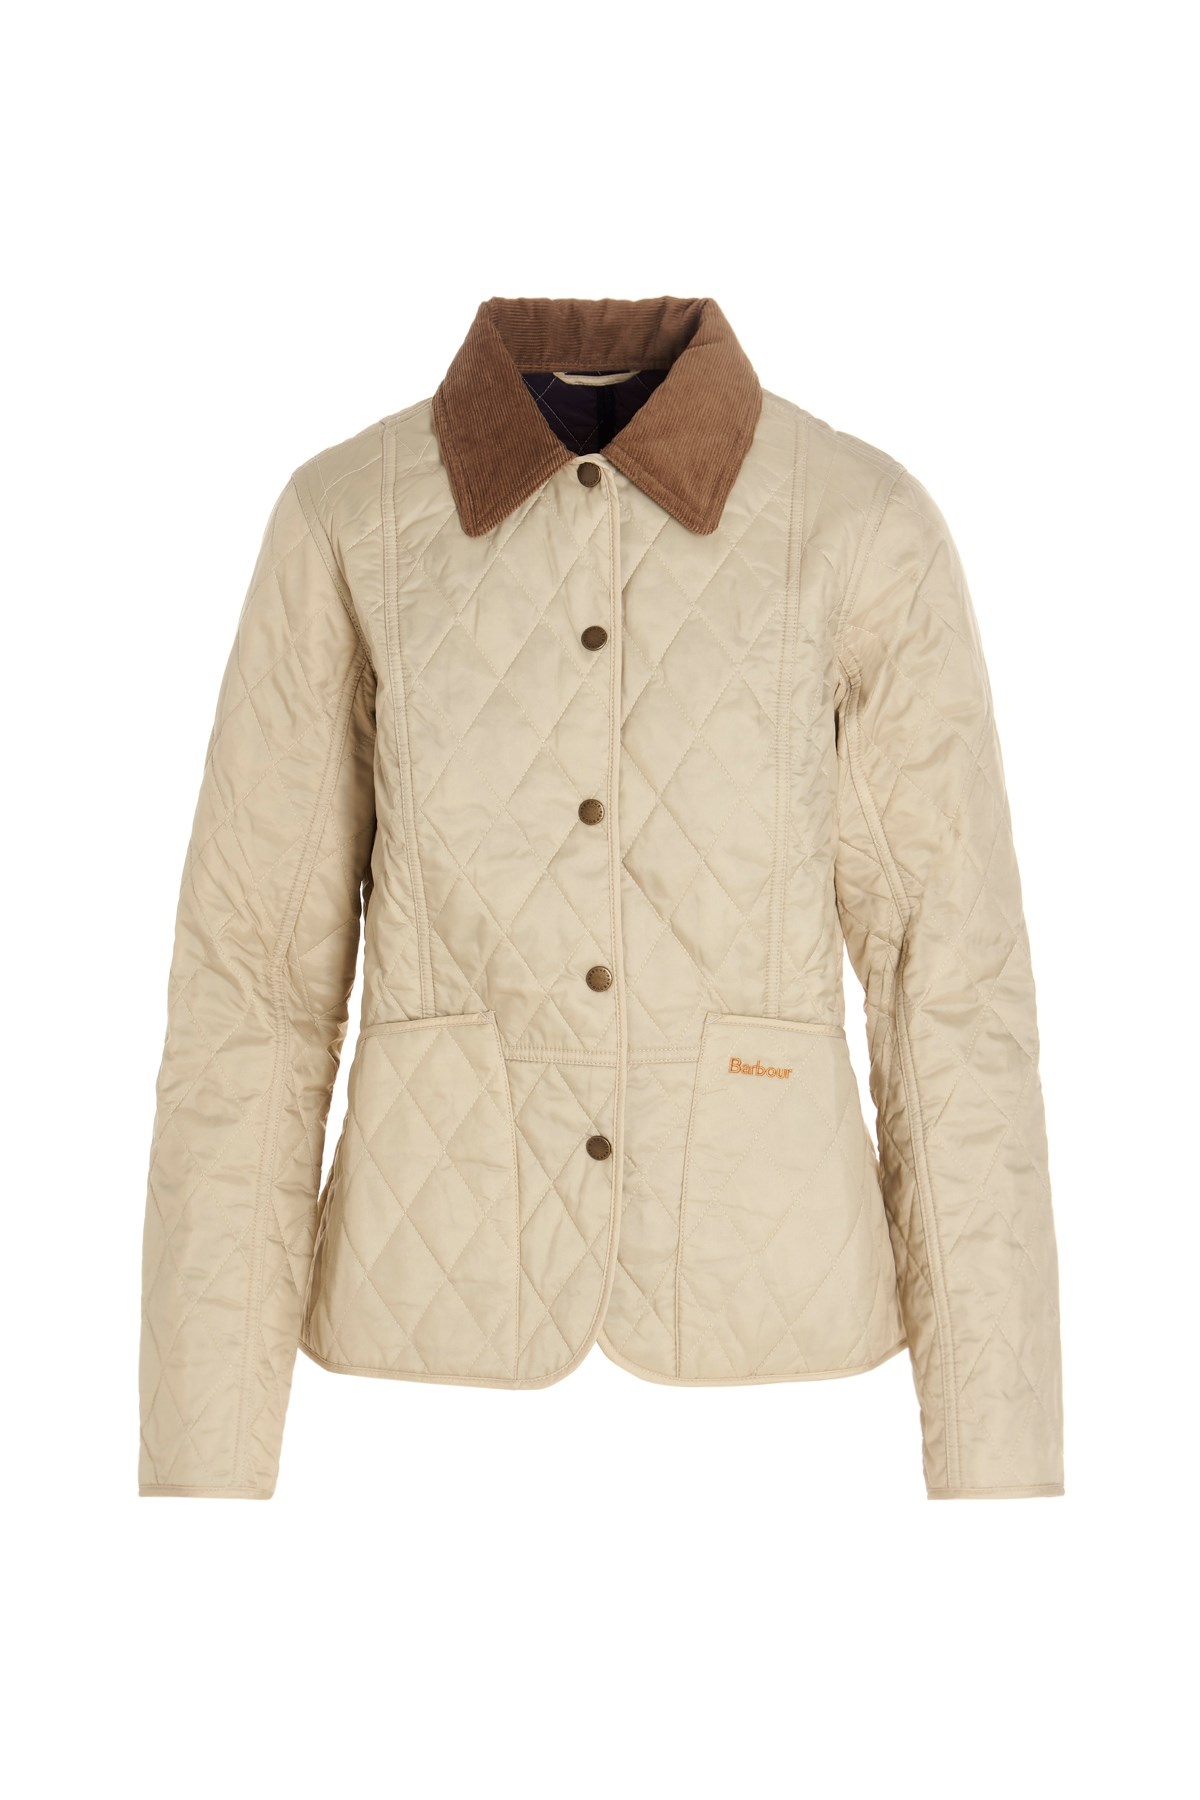 'Liddesdale' jacket - 1